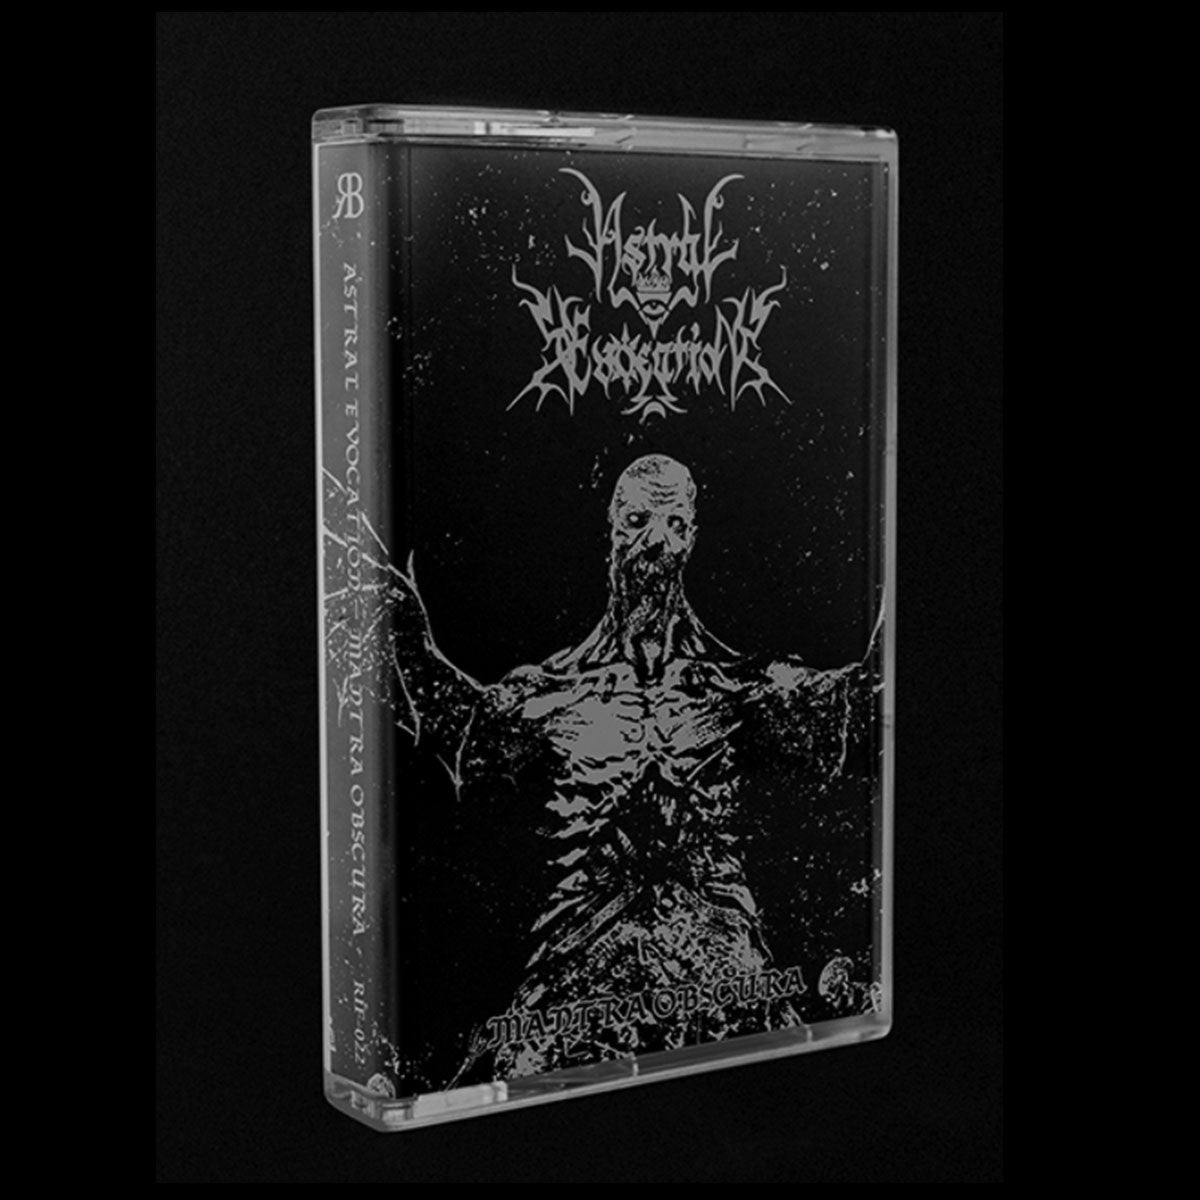 Astral Evocation - Mantra Obscura cassette